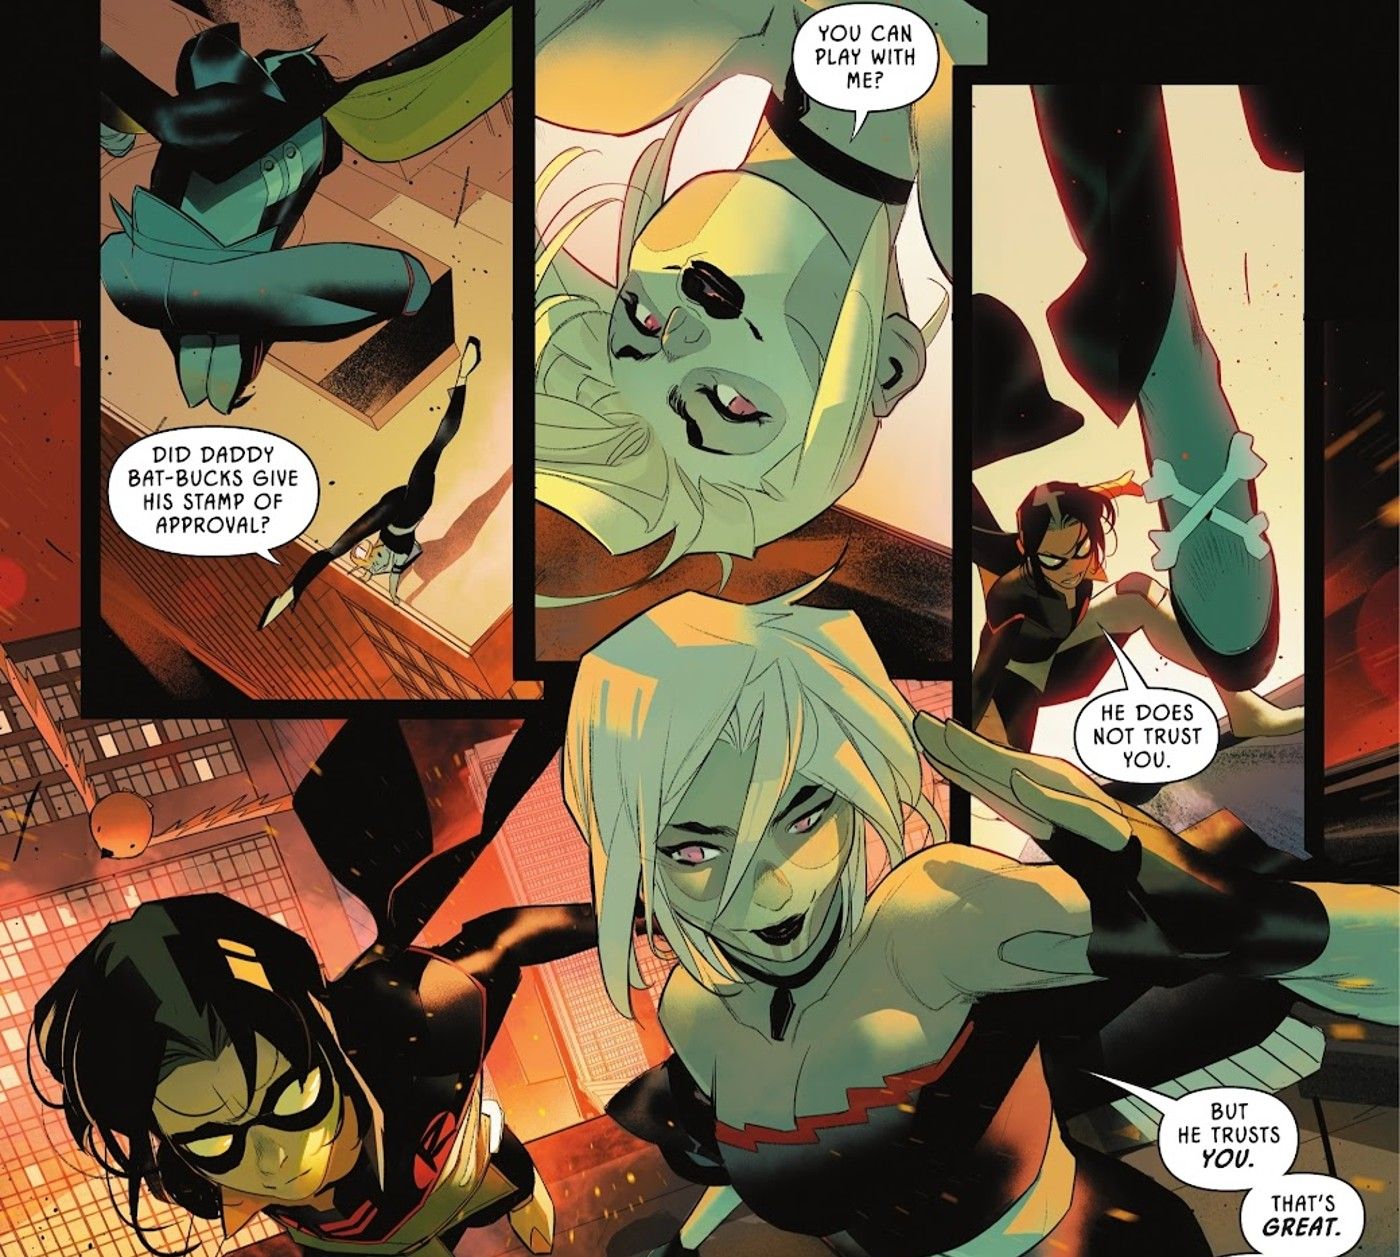 Comic book panels: Damian Wayne and Flatline jumping through Gotham.